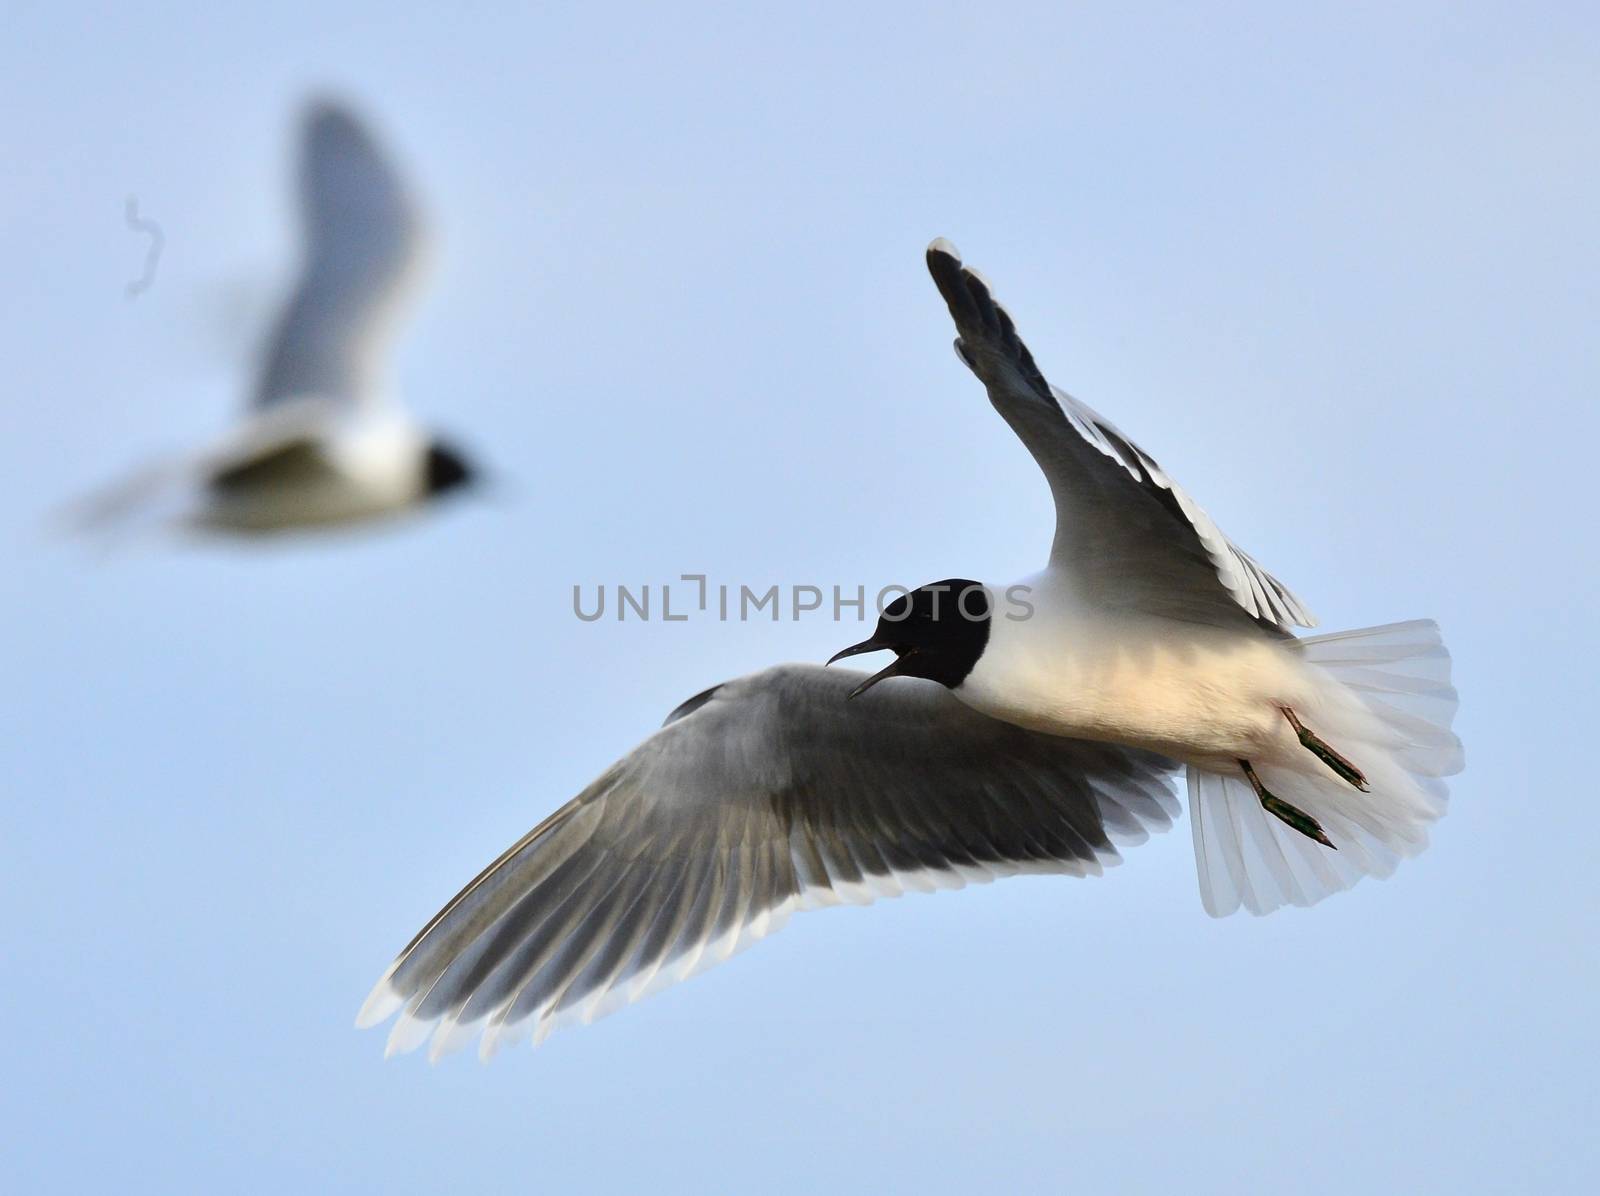  Little Gull (Larus minutus) in flight on the blue sky  background.